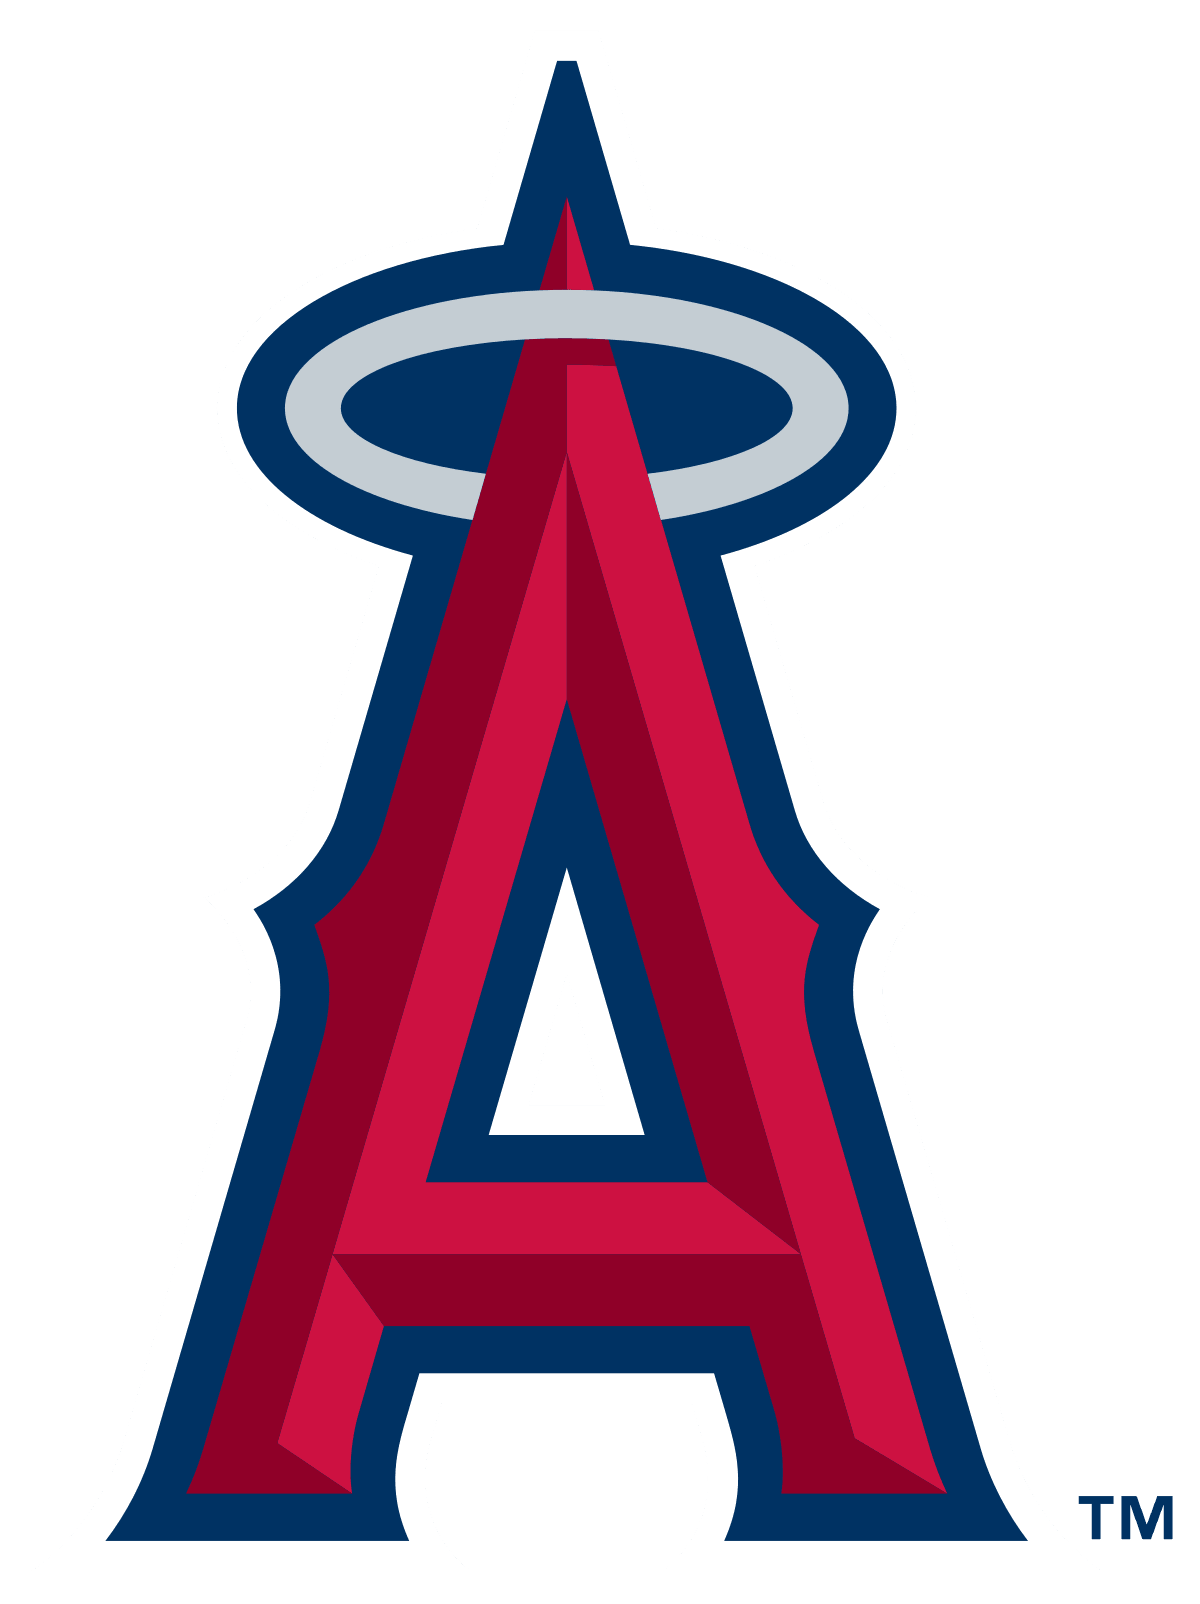 Pop! MLB - Baseball - Los Angeles Angels - Mike Trout - #93 - Hobby Champion Inc